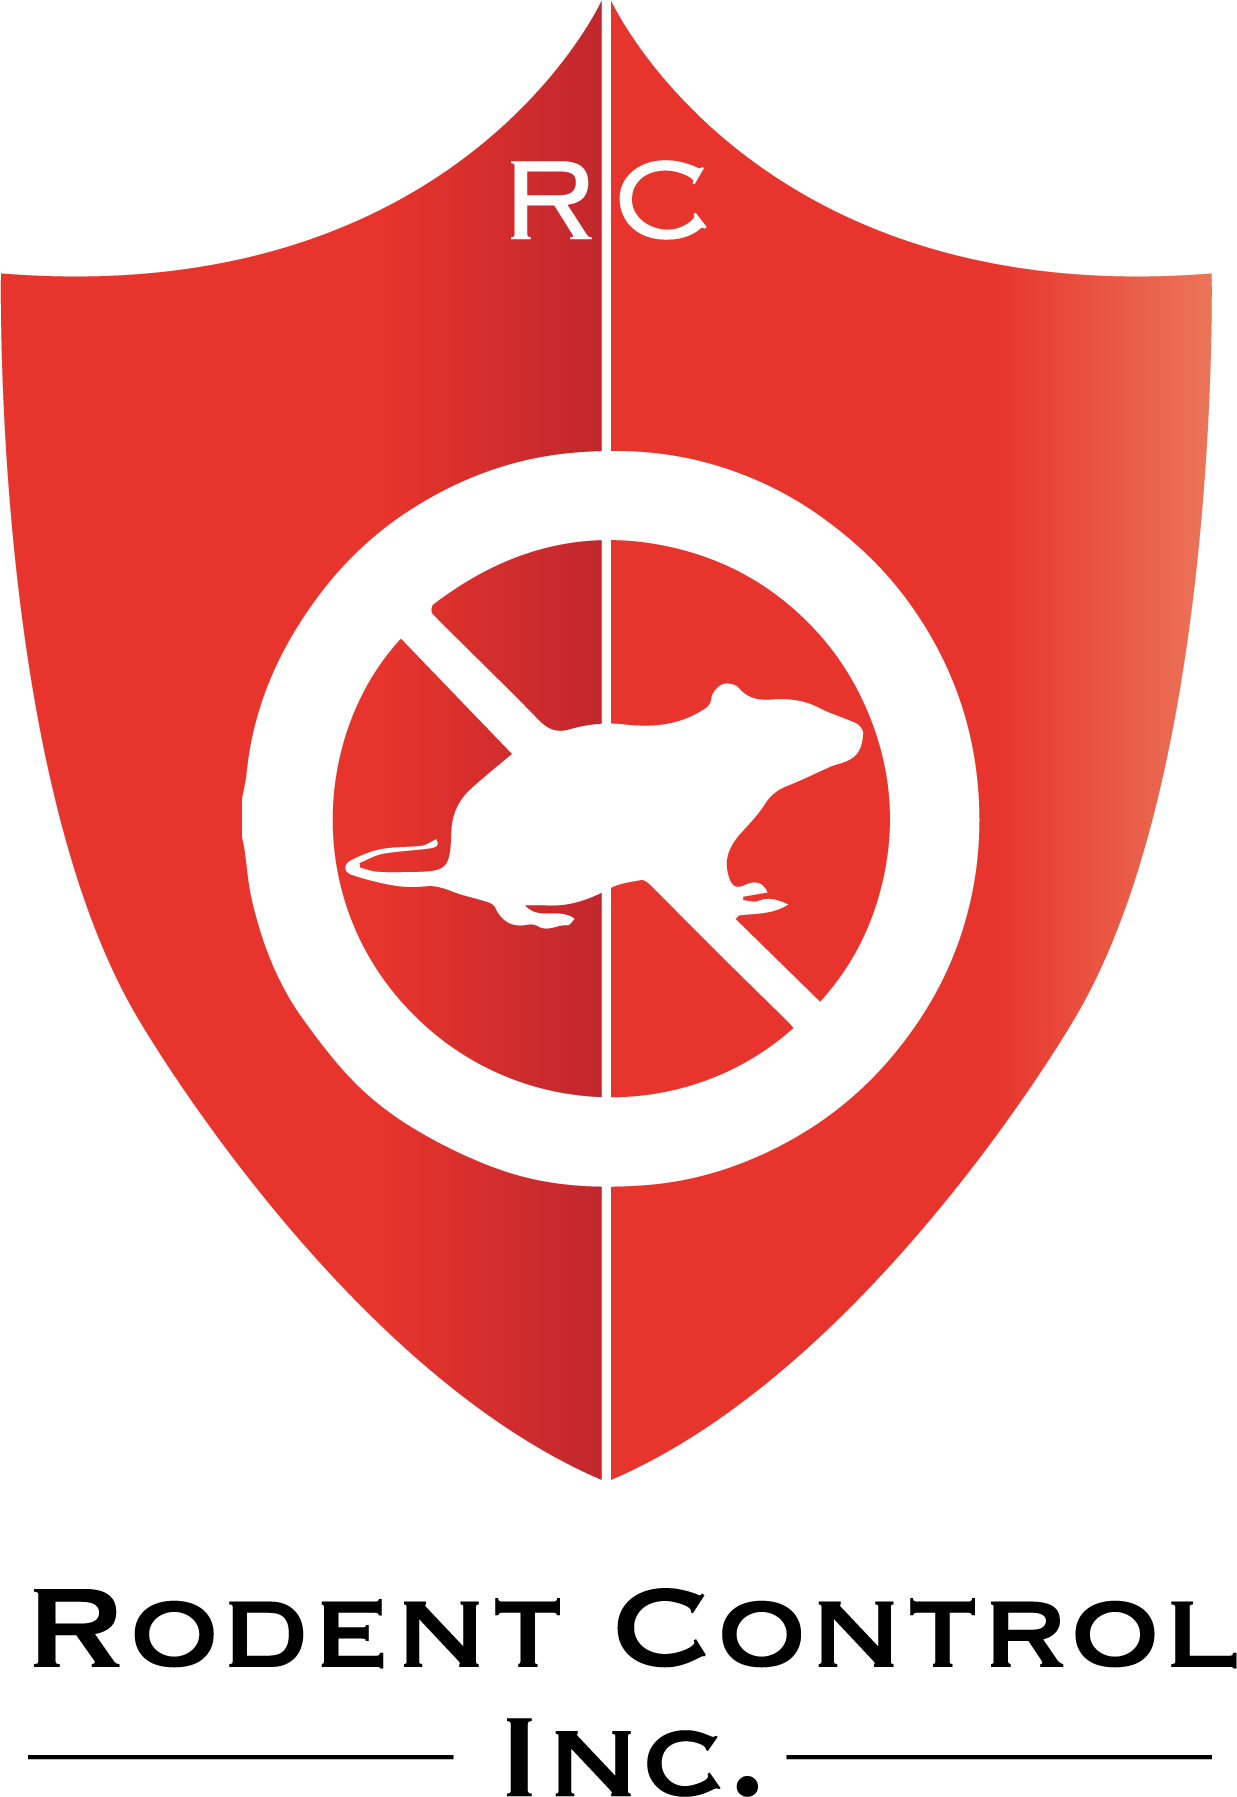 Rodent Control Inc Logo